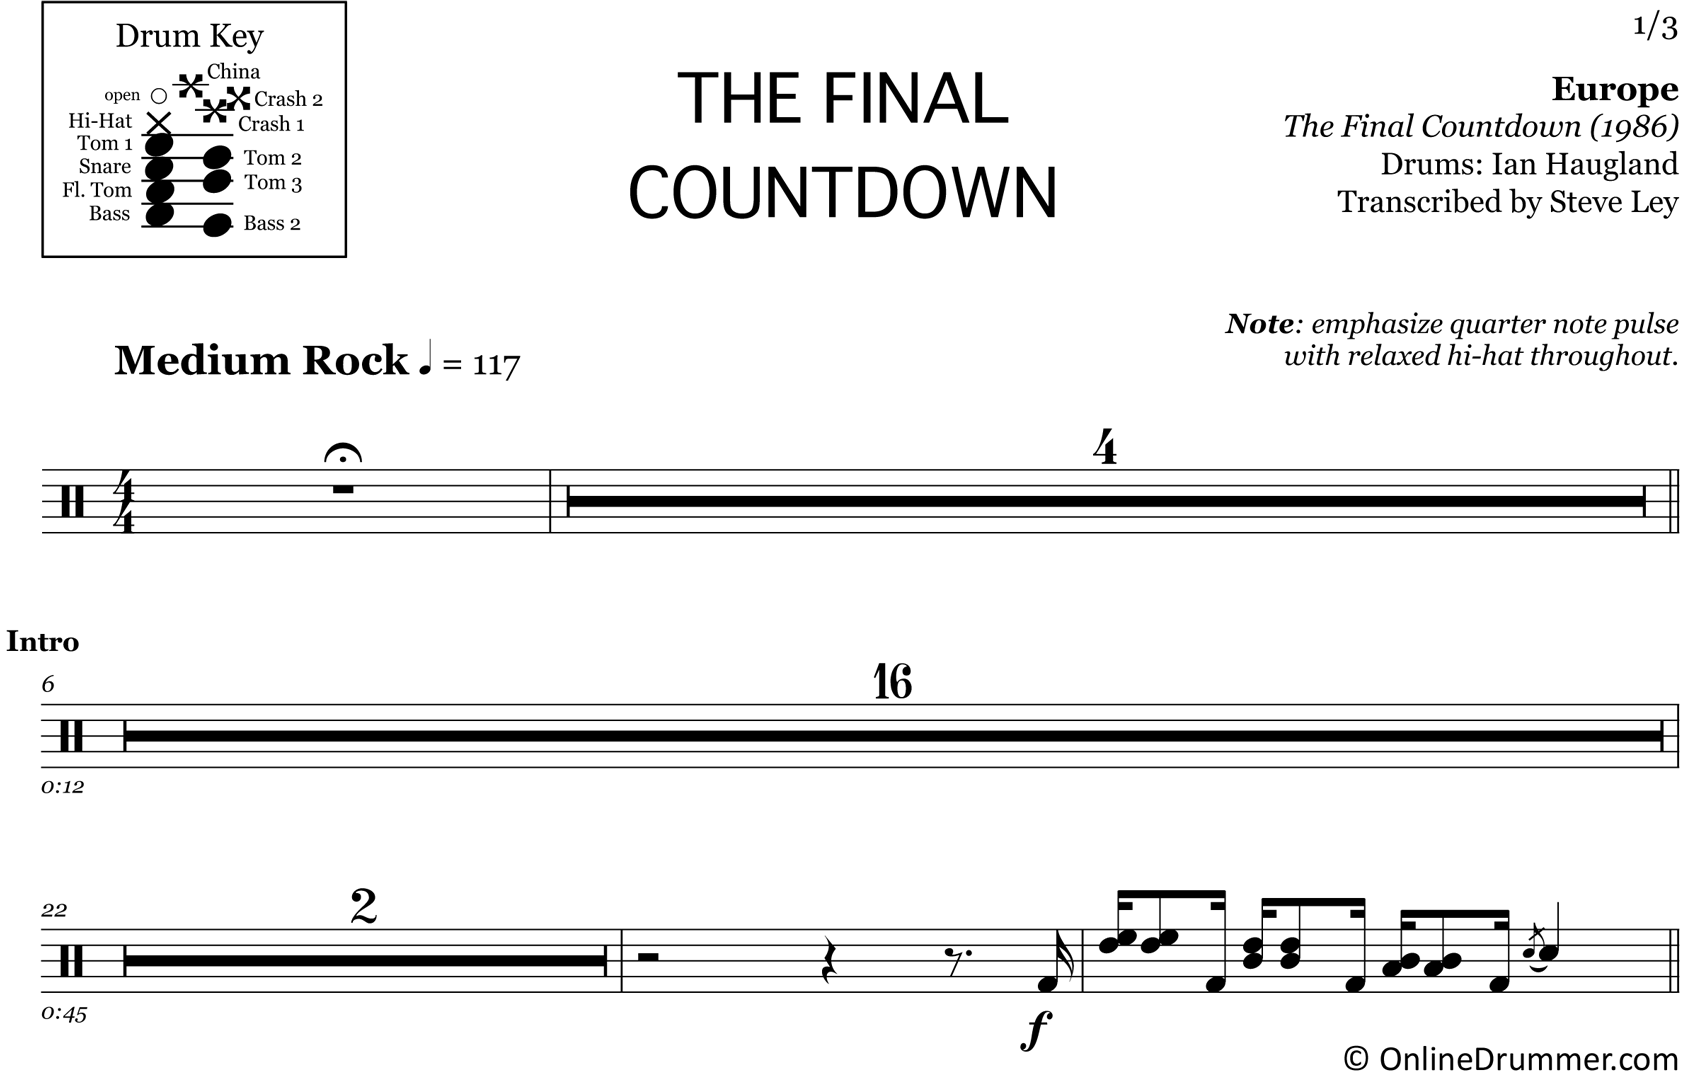 The Final Countdown - Europe - Drum Sheet Music